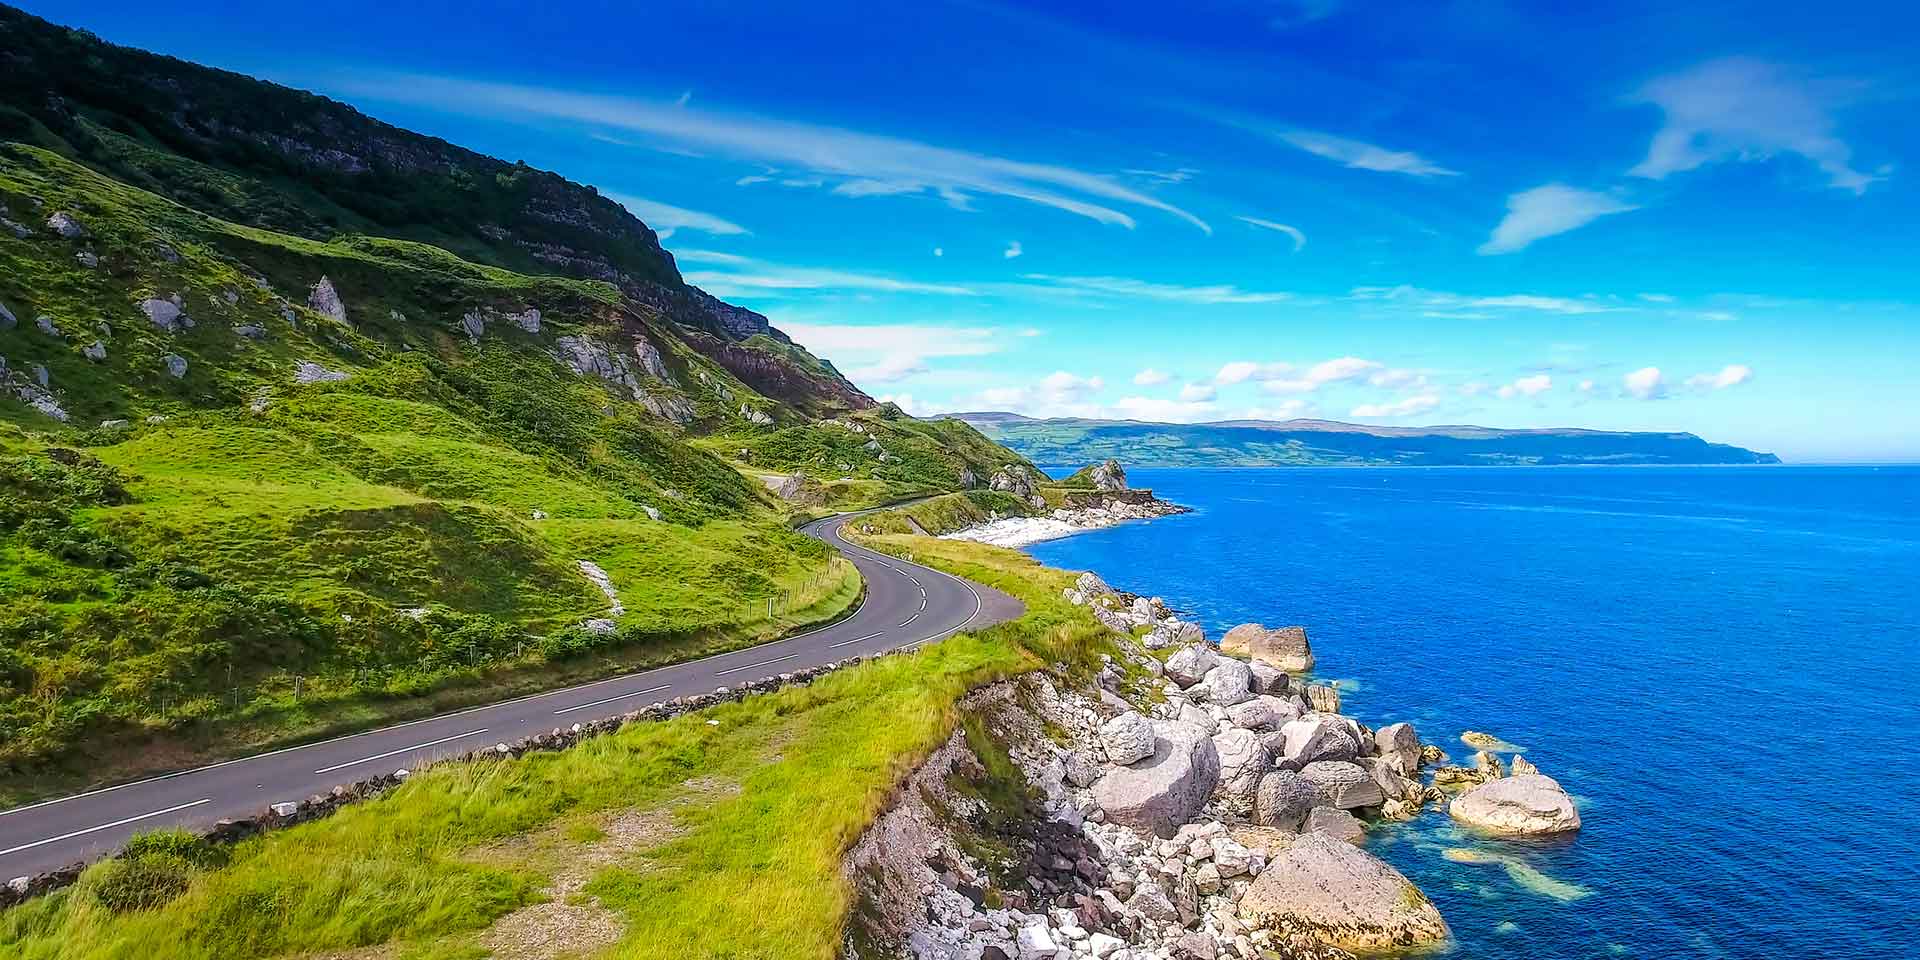 Ireland's causeway coastal route highway runs alongside green hills and blue water